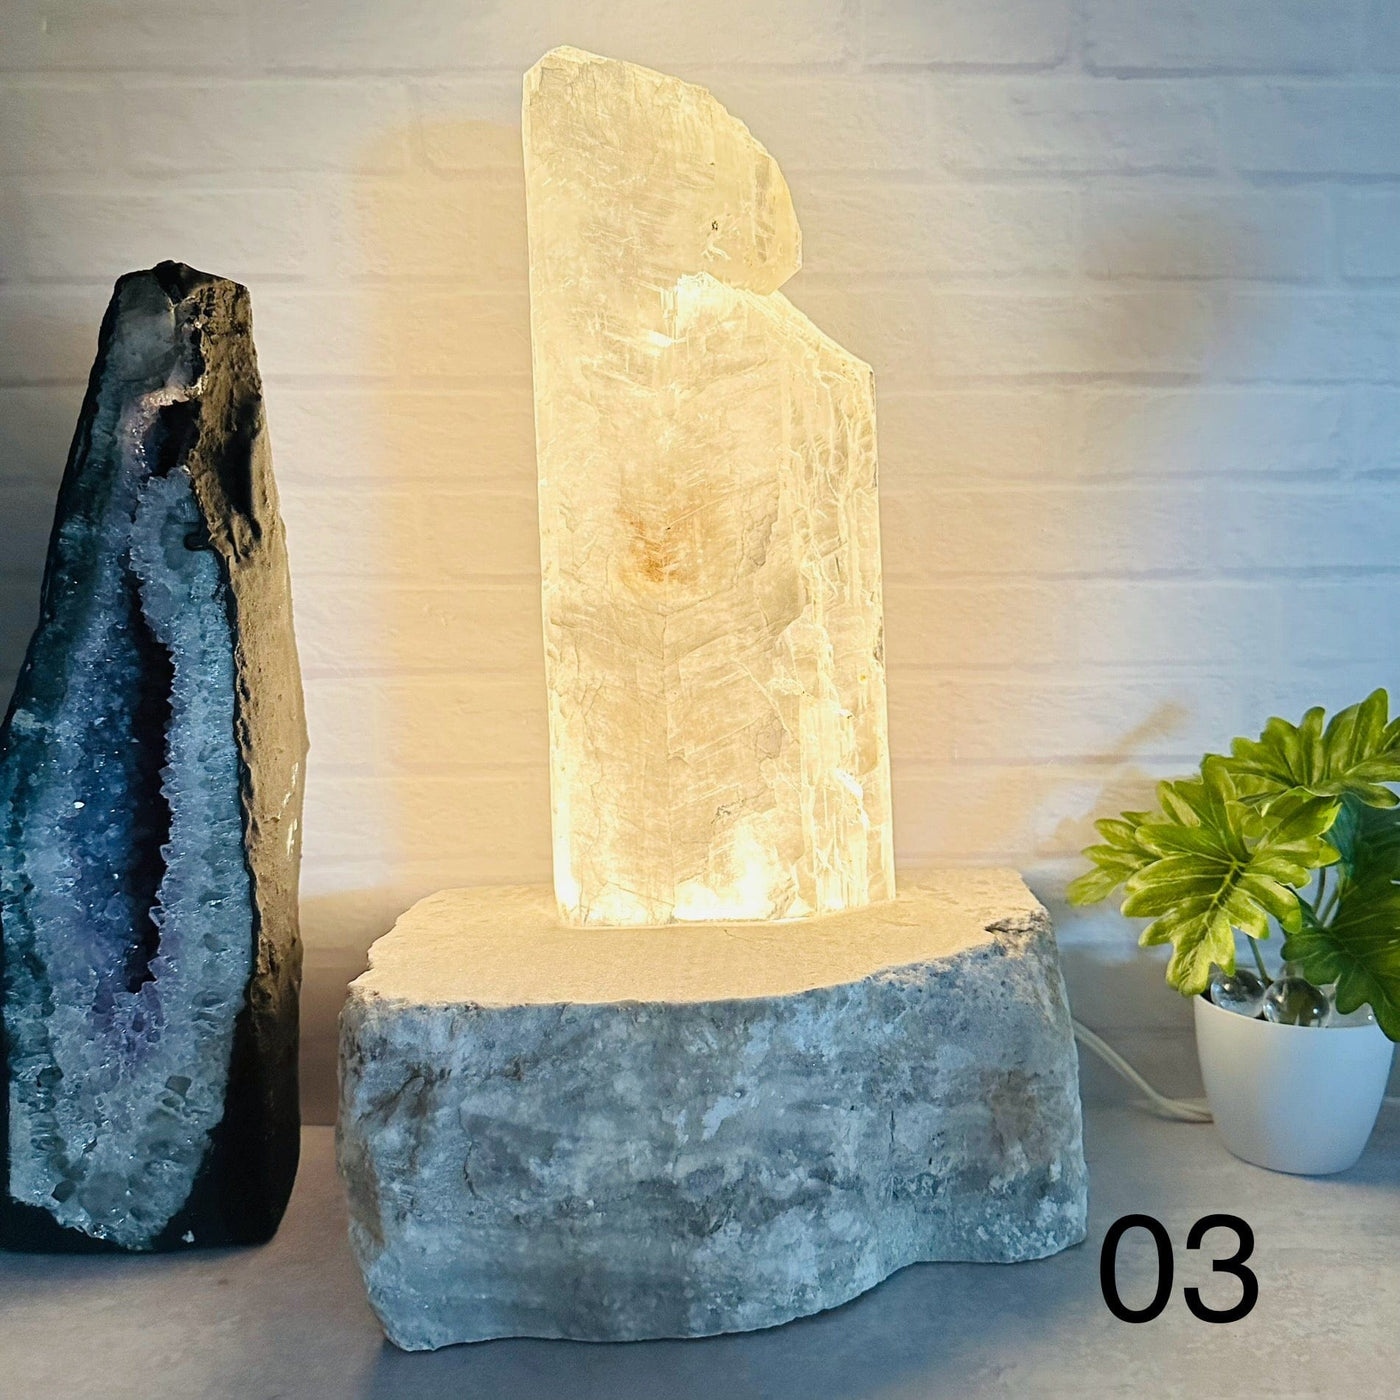 Selenite Lamp with Gray Onyx base - Crystal Decor - You Choose - option 03